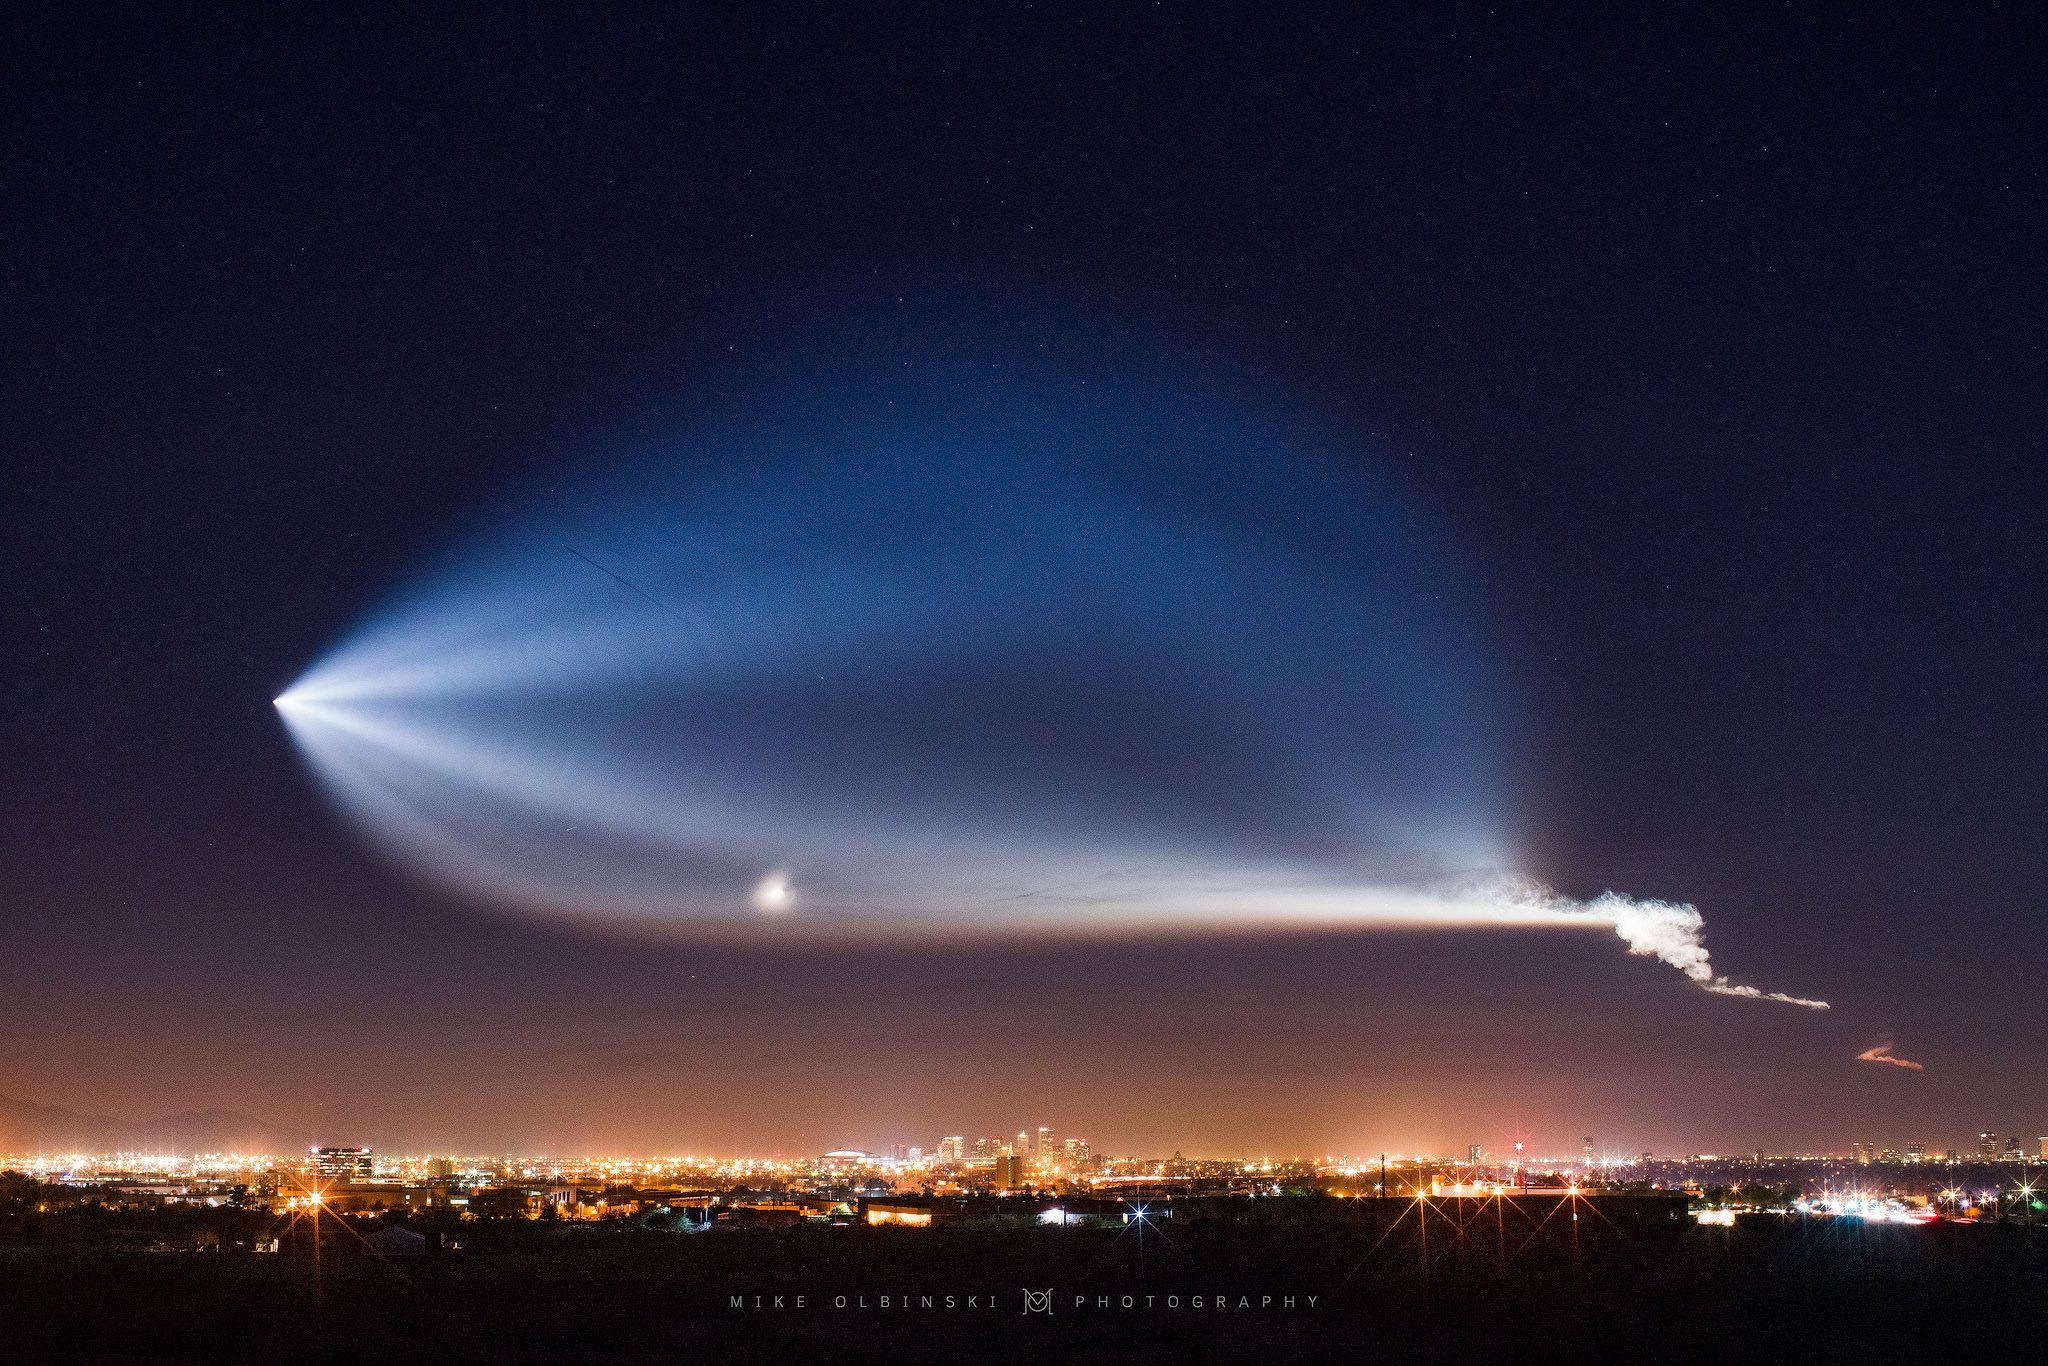 SpaceX Falcon 9 Launch [19201200] #Hdwallpaper #wallpaper #image